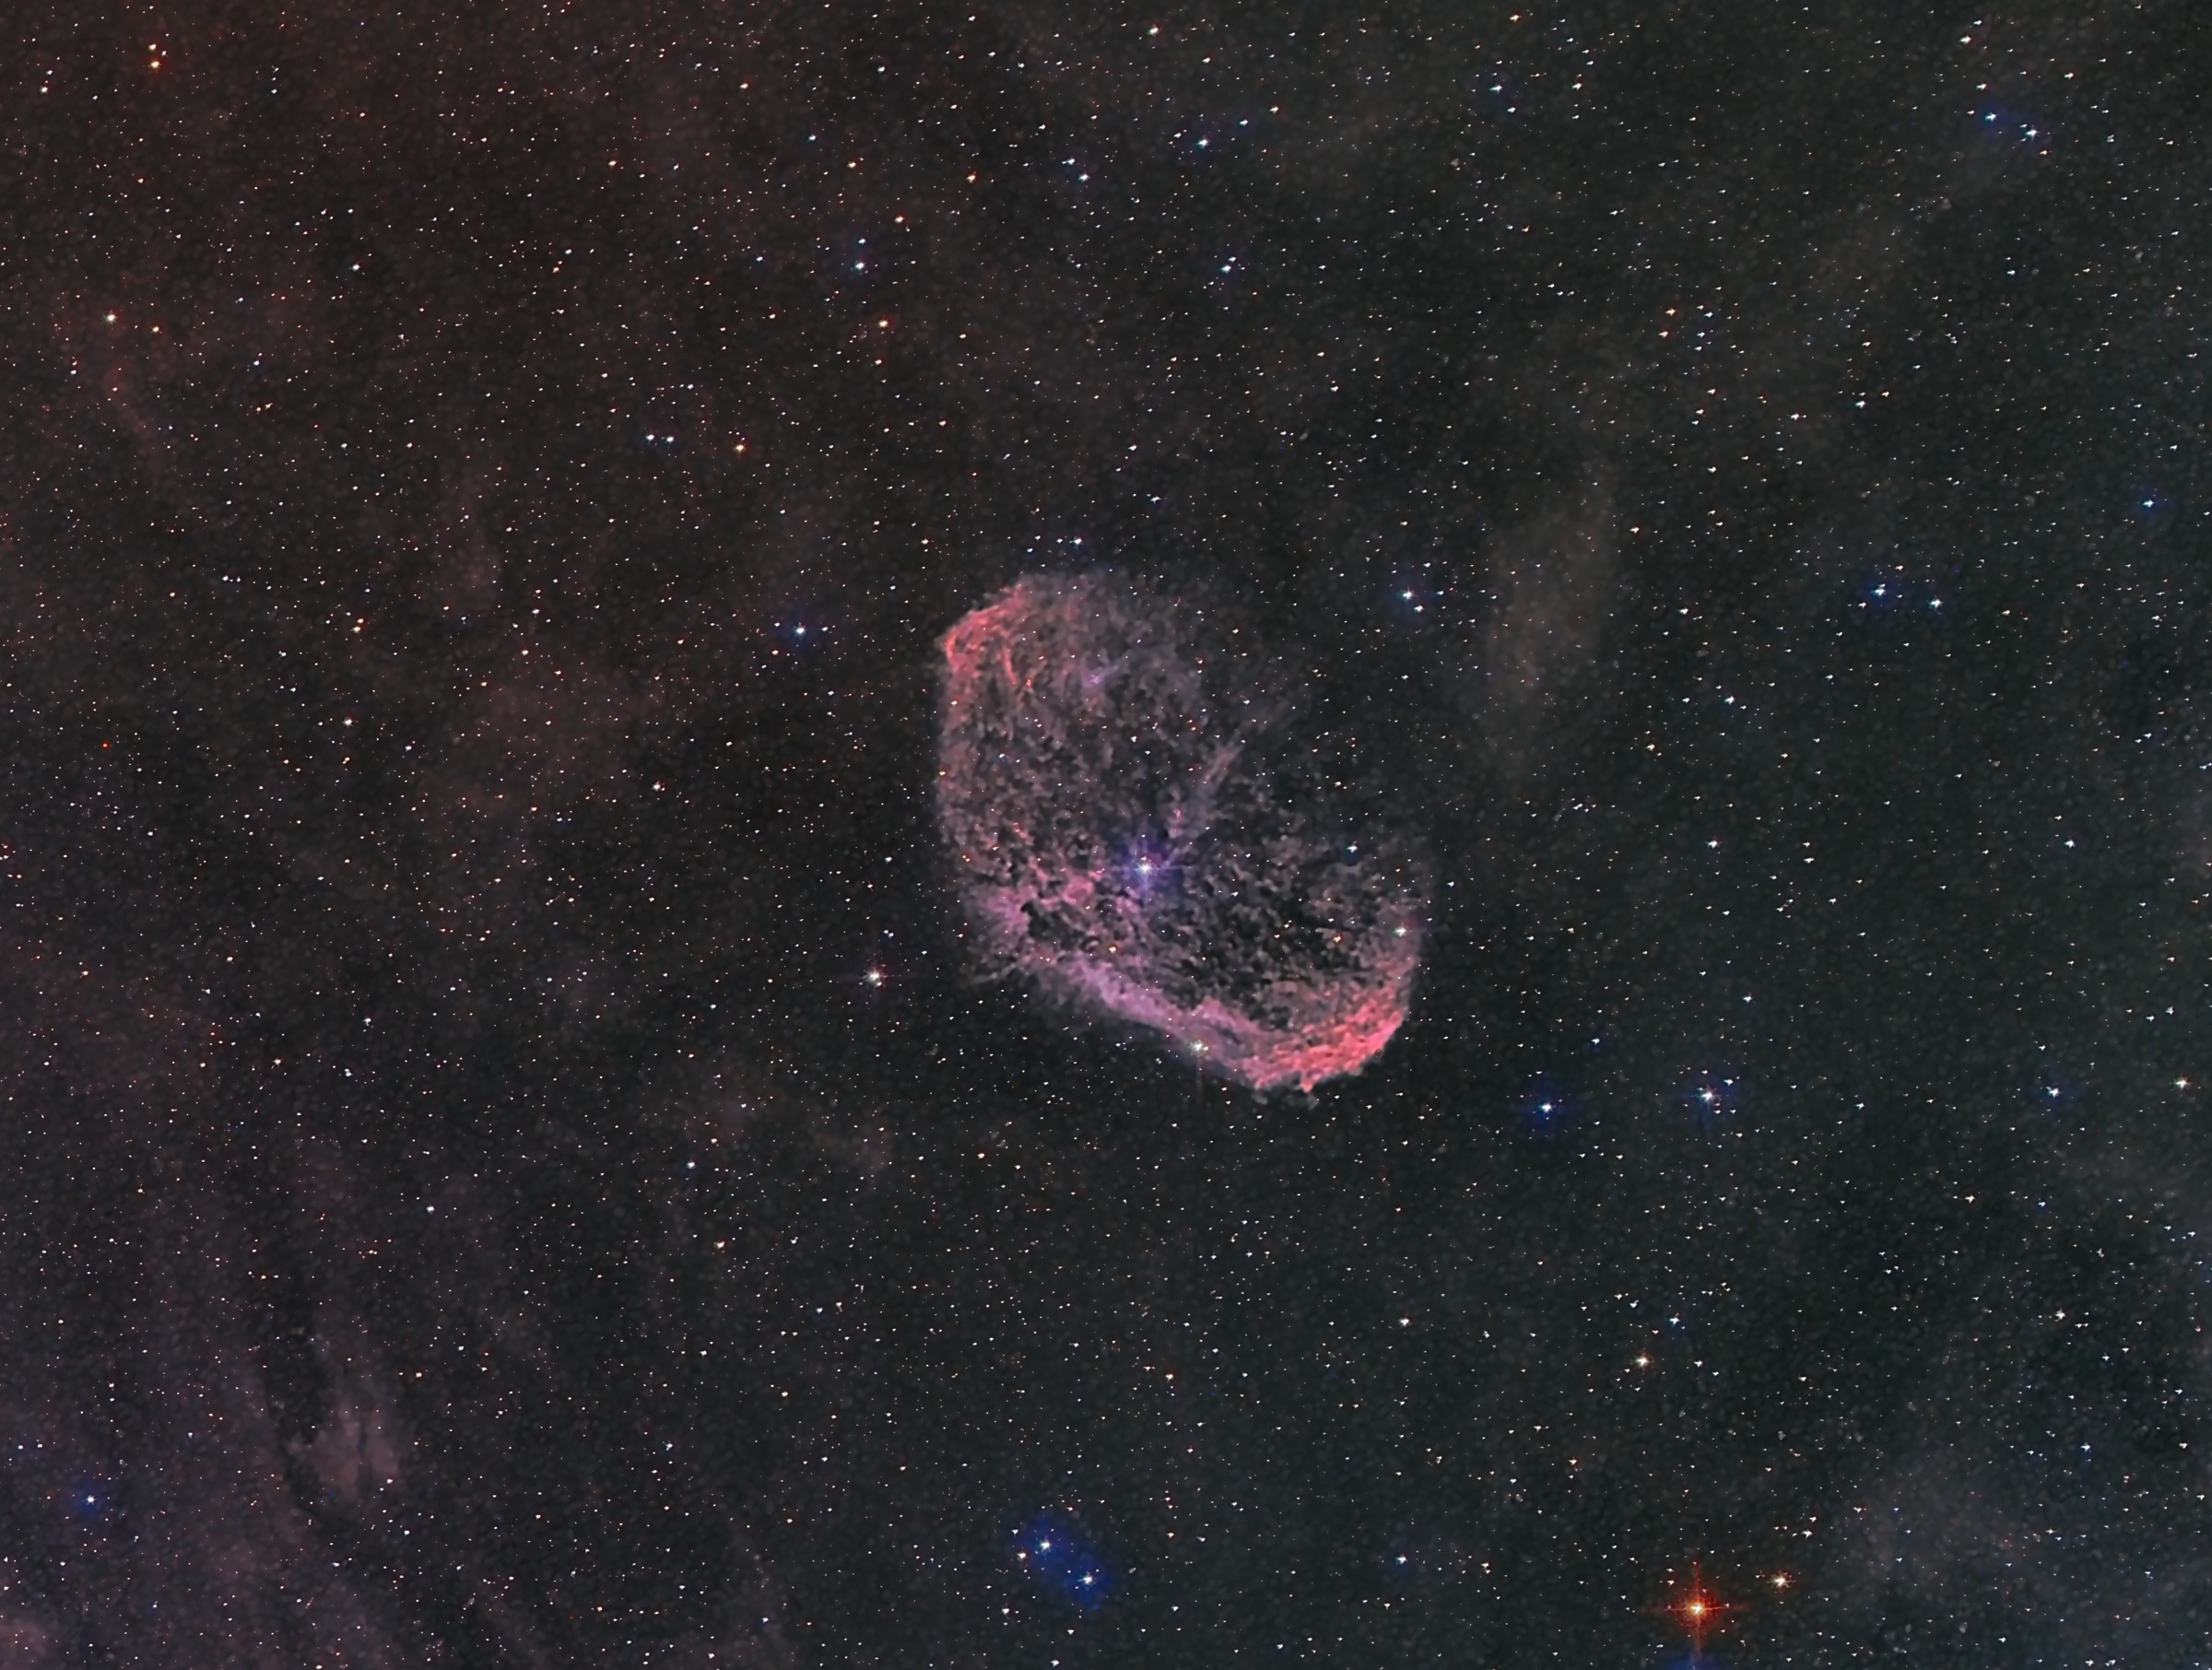 24 - NGC 6888 Crescent Nebula, an emission nebula in Cygnus